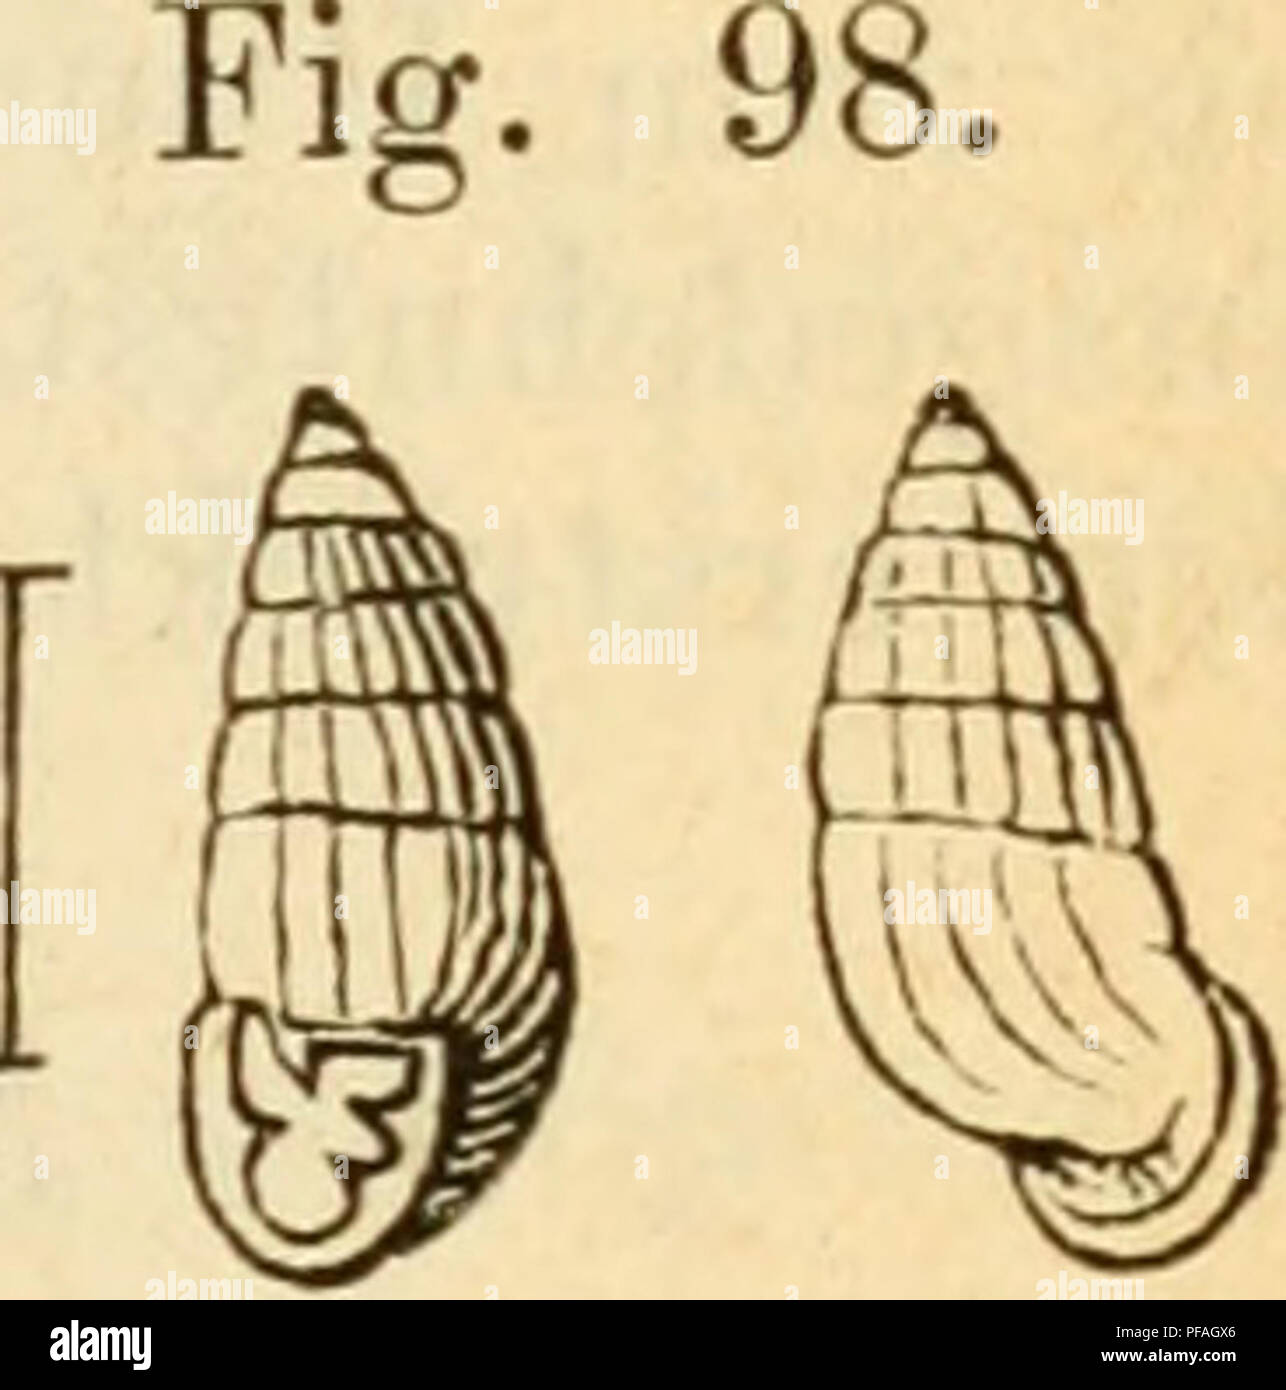 . Deutsche excursions-mollusken-fauna. Mollusks. 177 3. Chondrula guadridens, Müller. Helix qiMdridetn), Müller, Verm. hißt. p. 107 Nr. 306. 1774. Turbo — Gmelin, p. 3610 Nr. 92. Biilimus — L. Pfeiffer, Monogr. II. p. 131 Nr. 343, Goldfusb, A. Schmidt, Kreglinger. Piipa qnadridens, Drap., tabl. p. 60 Nr. 15. — Hist. moll. p. 67 t. 4 flg. 3. — Eossm., Xeon. flg. 308 und 723. — quadriden^, Chemnitz, ed. 2. Gen. Pupa p. 6 t. 1 fig. 14—15. Bulimimts — Kreglinger, Syst. Verz. p. 147. Emore — Hartmann, Gast. I. p. 150 t. 49 fig. 1—3. Thier: blassgrau, durchscheinend; Augenträger lang, Fühler sehr ku Stock Photo